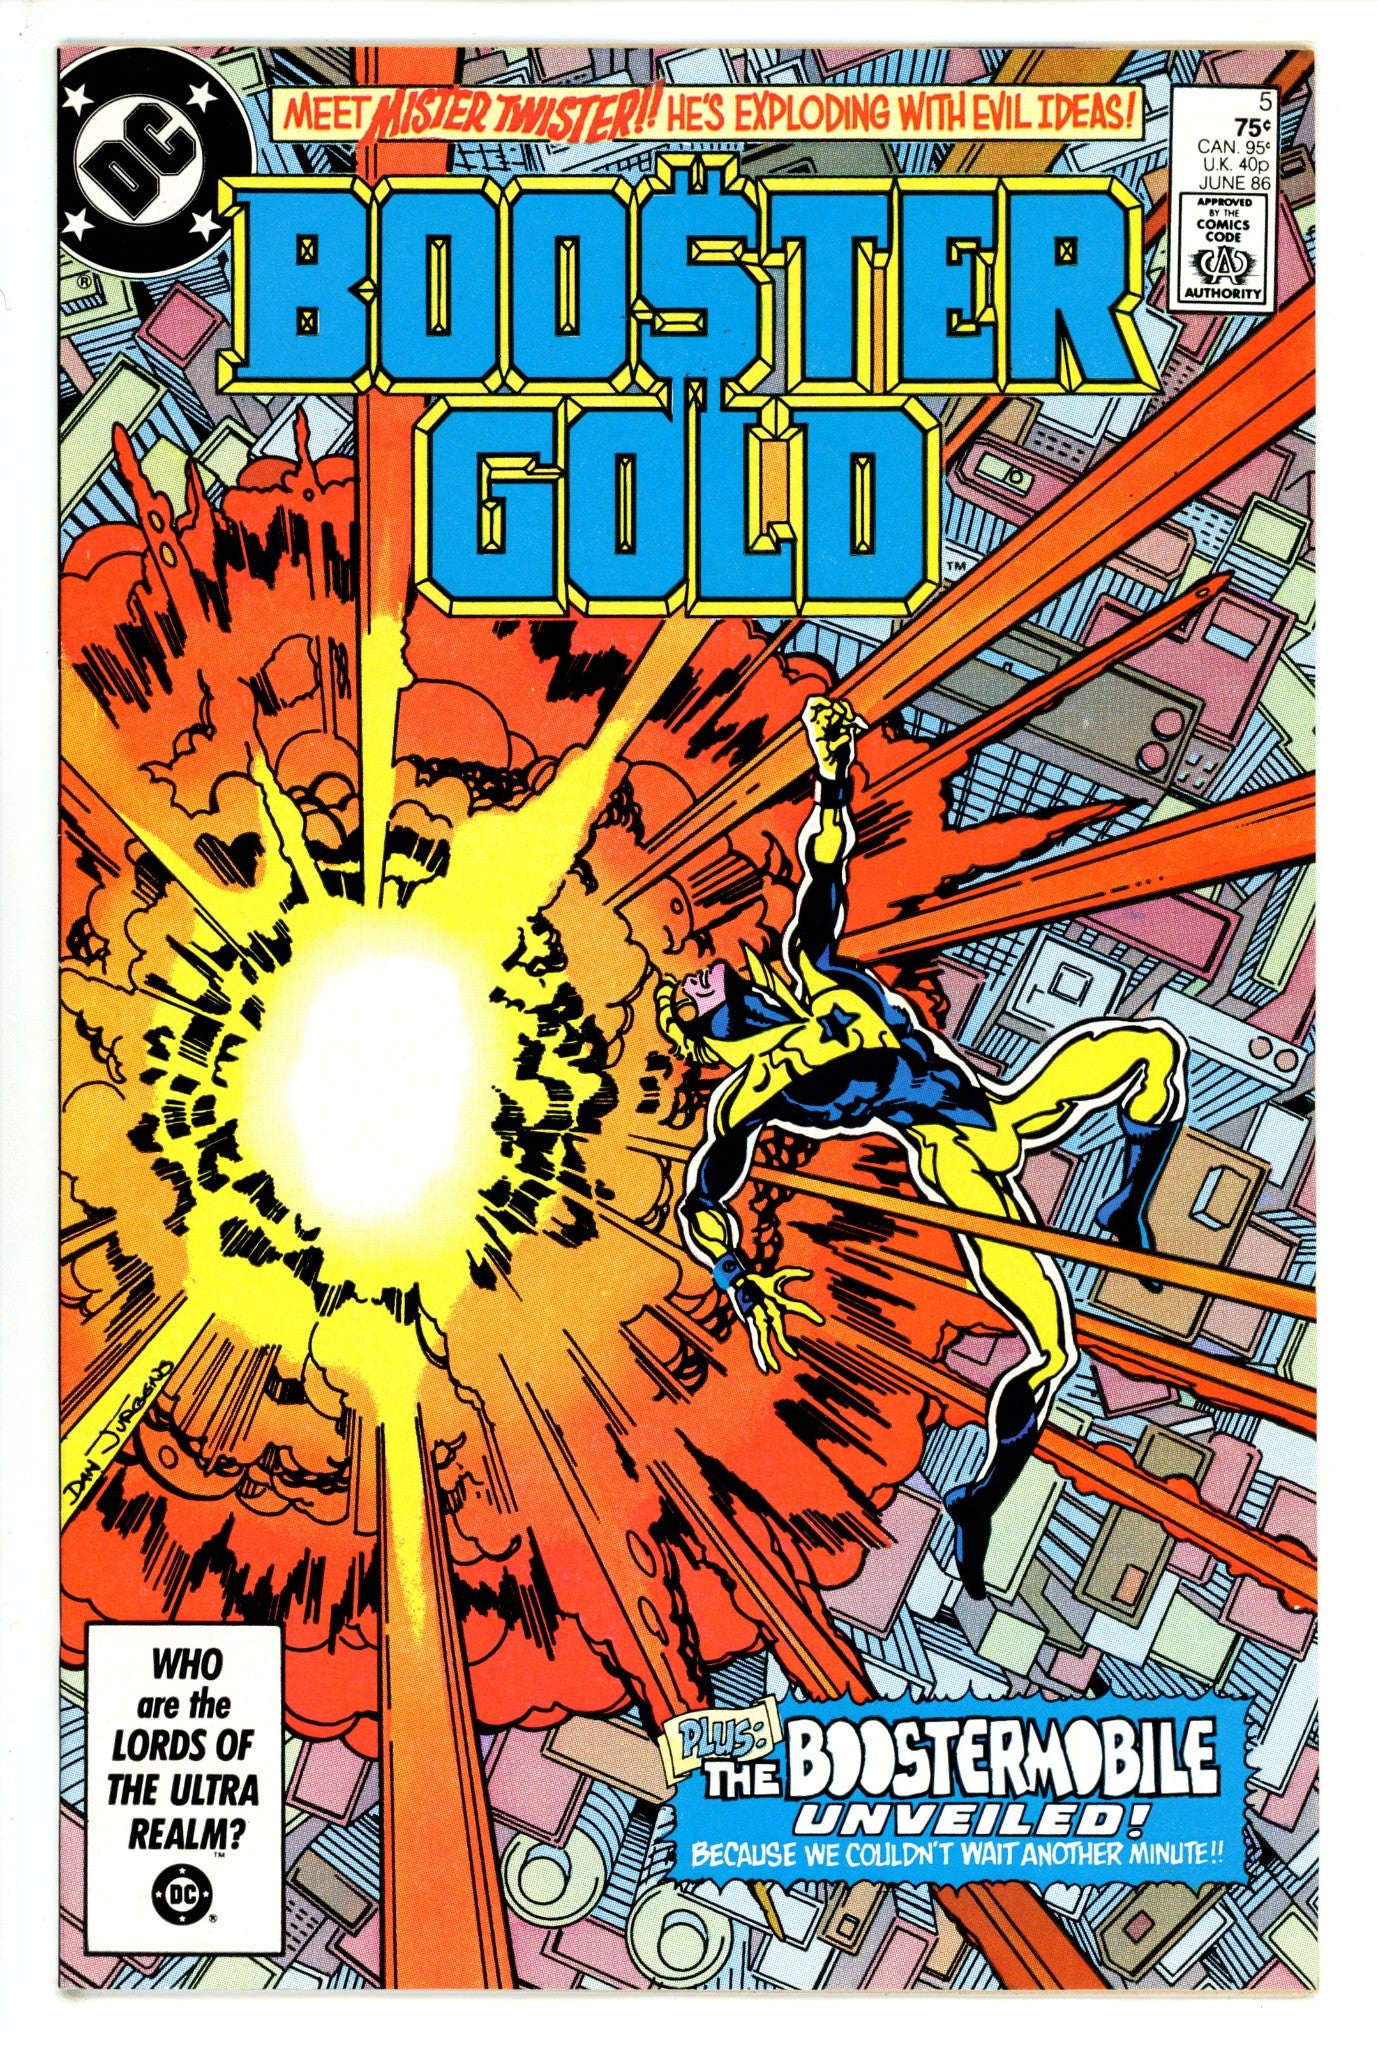 Booster Gold Vol 1 5 (1986)